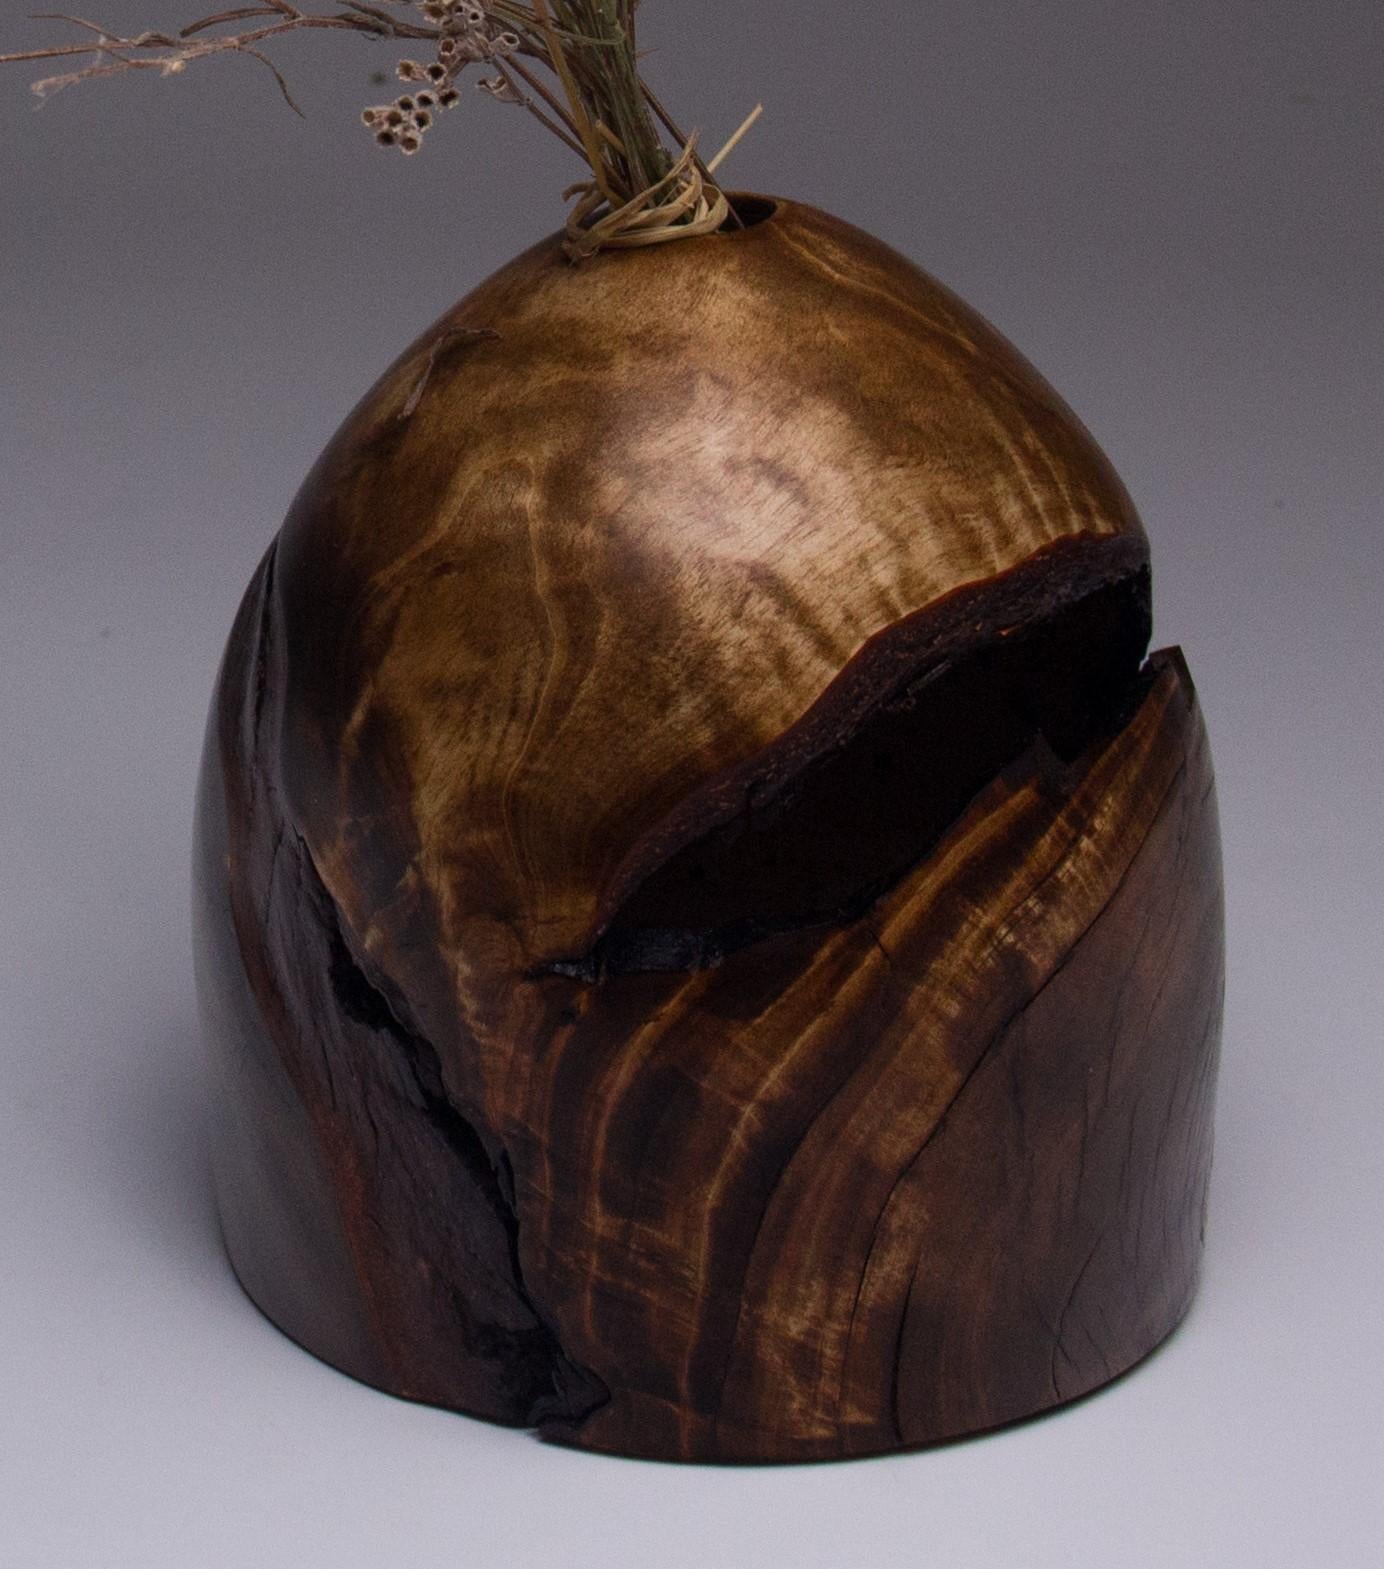 Russian Unique Hand Sculpted Wooden Vase by Vlad Droz